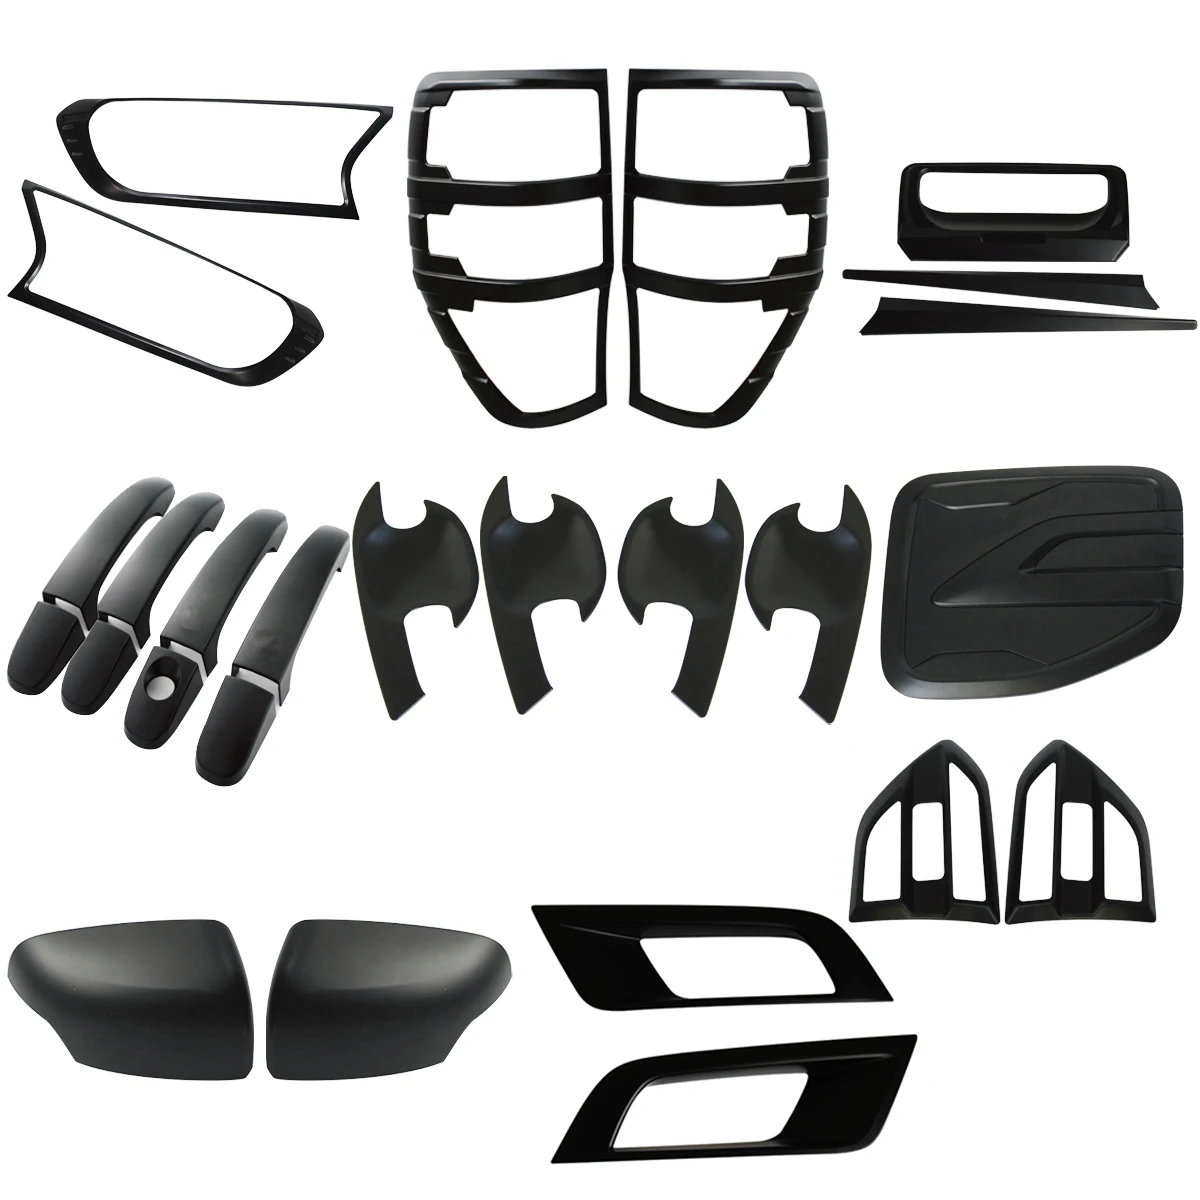 

YCSUNZ accessories for Ranger 2015 2016 Car ABS Carbon Fiber Accessories Kits 19 pcs Head Tail Fog Light Handle Mirror Cover